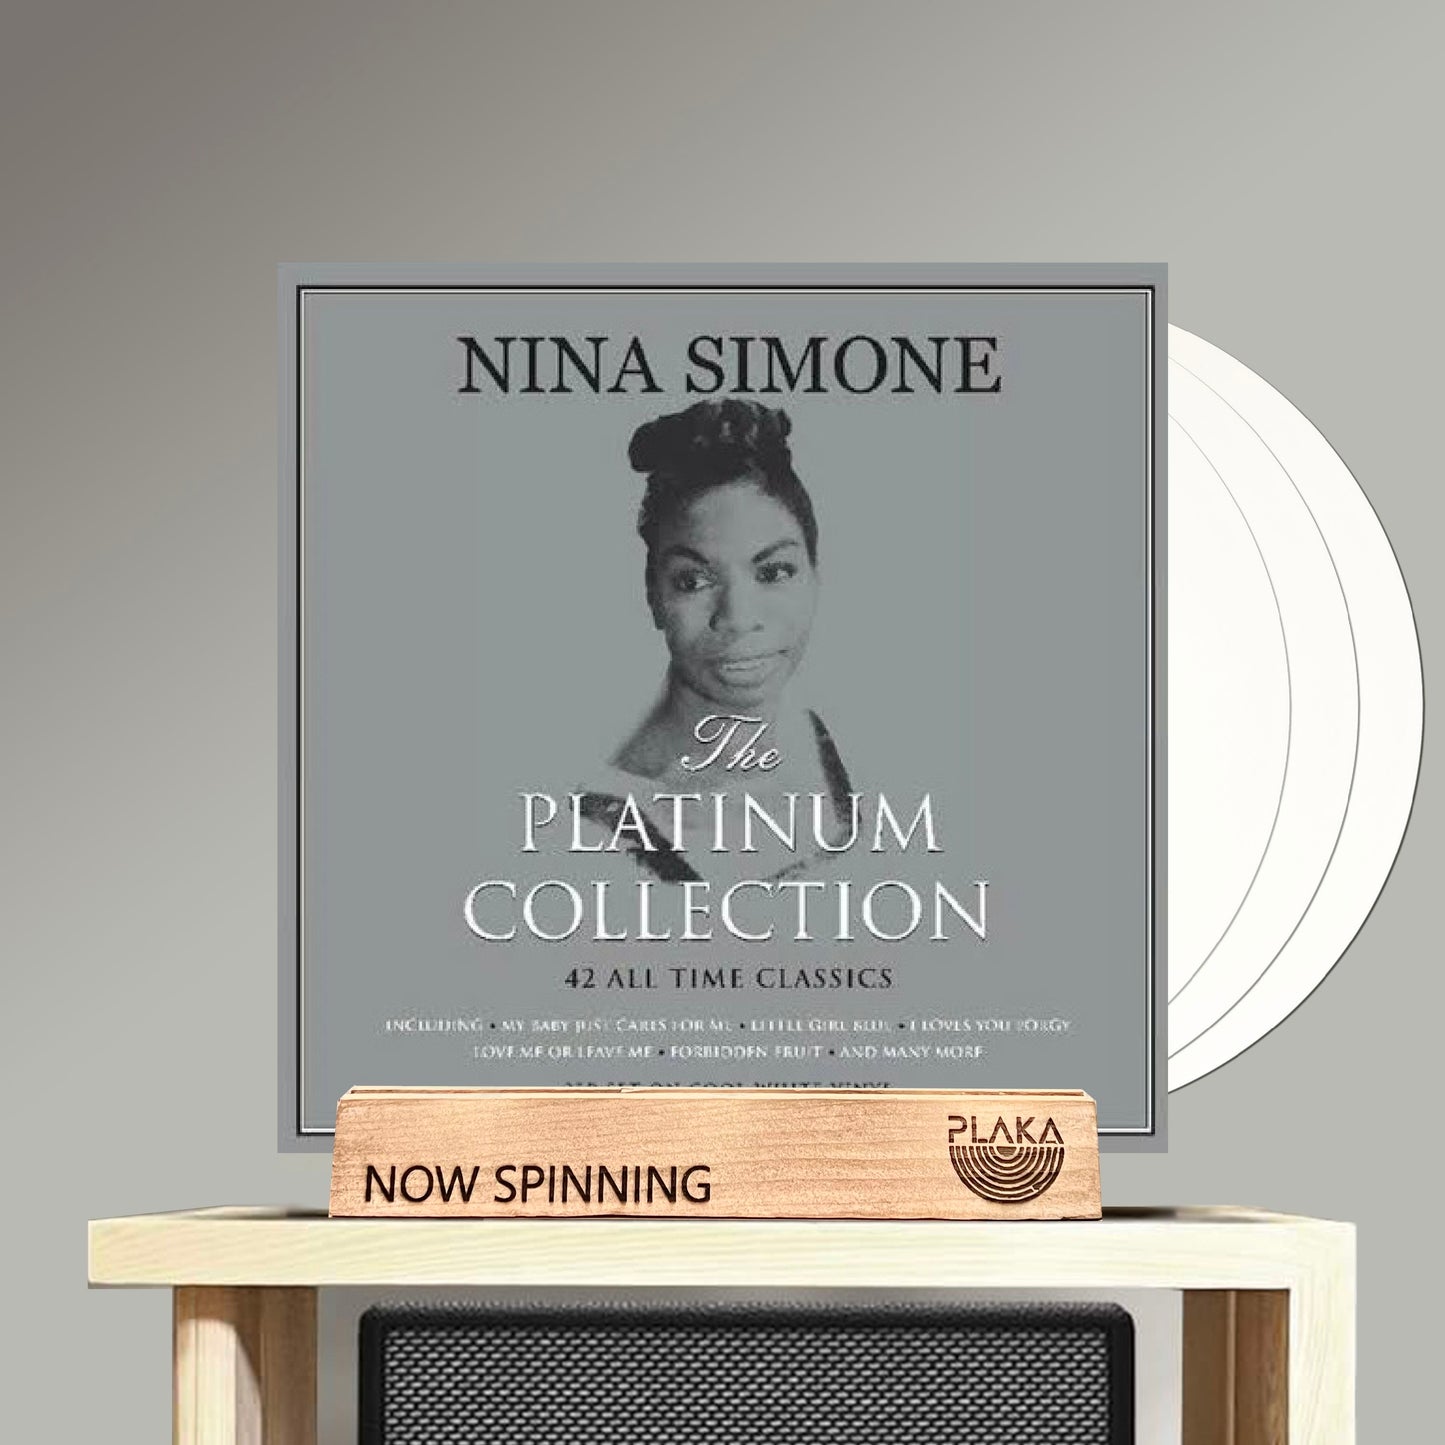 Nina Simone - Platinum Collection